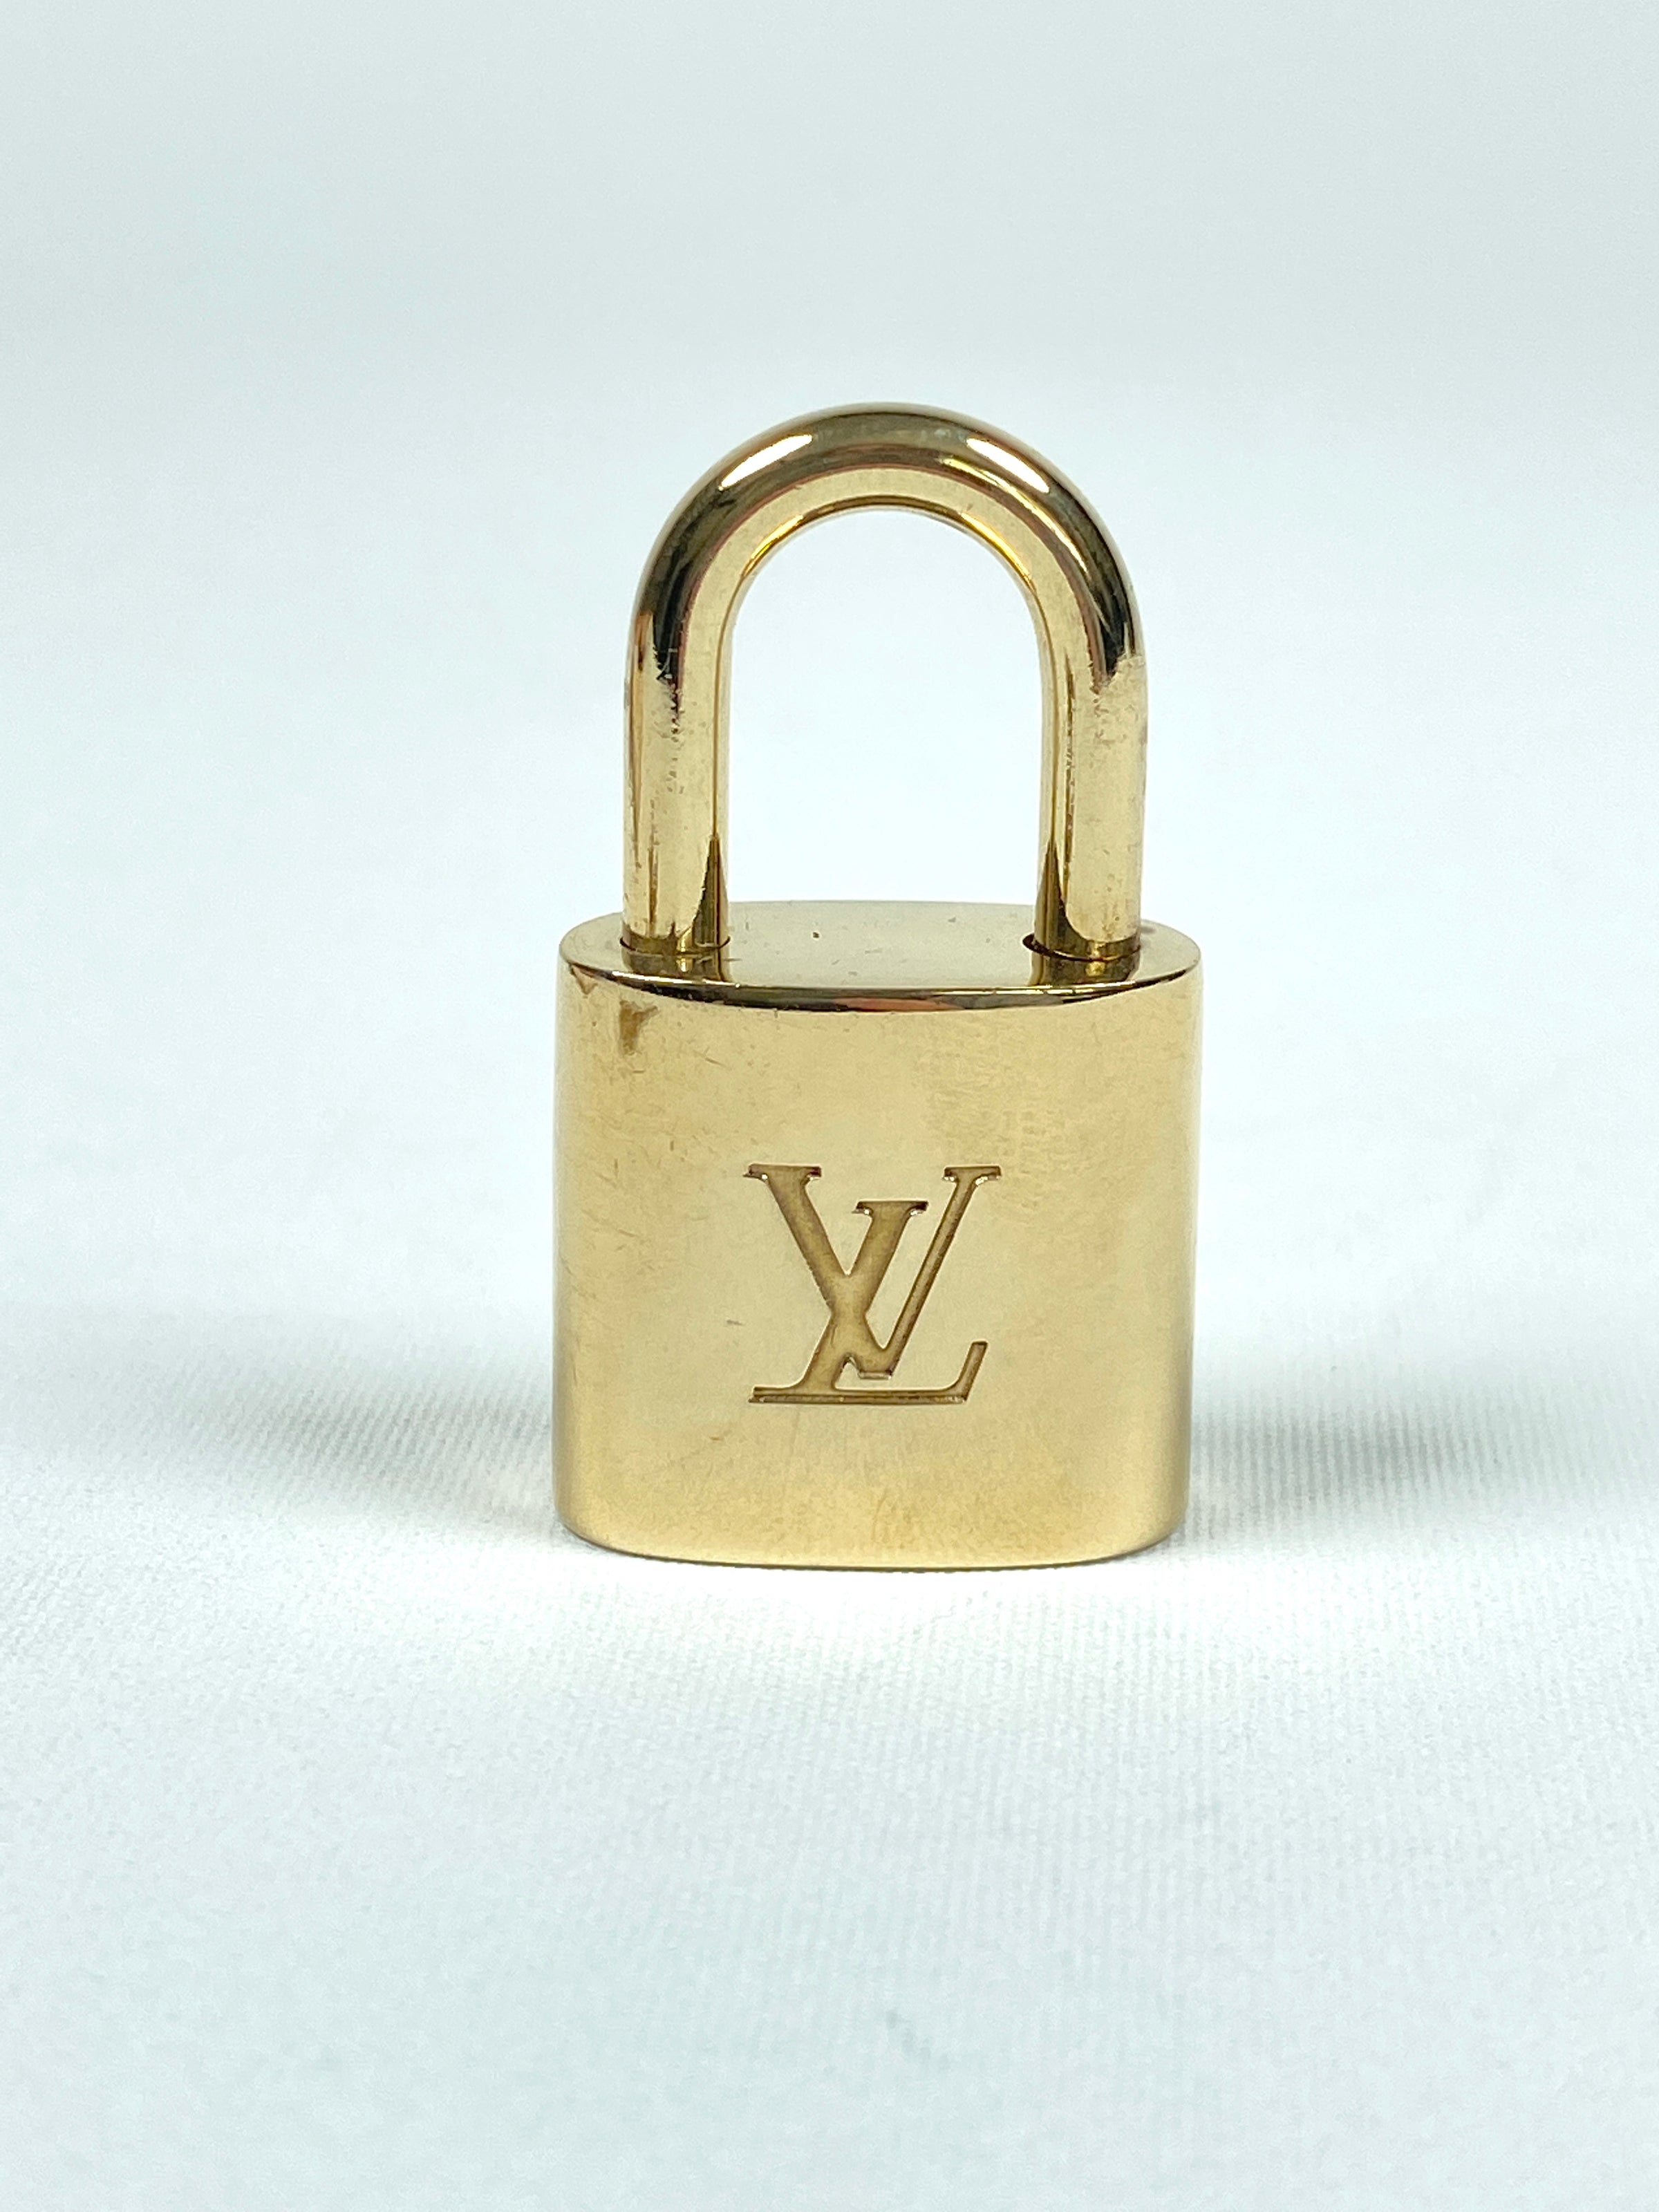 Authentic Louis Vuitton Gold Brass Lock and Key Set 317 -  Australia